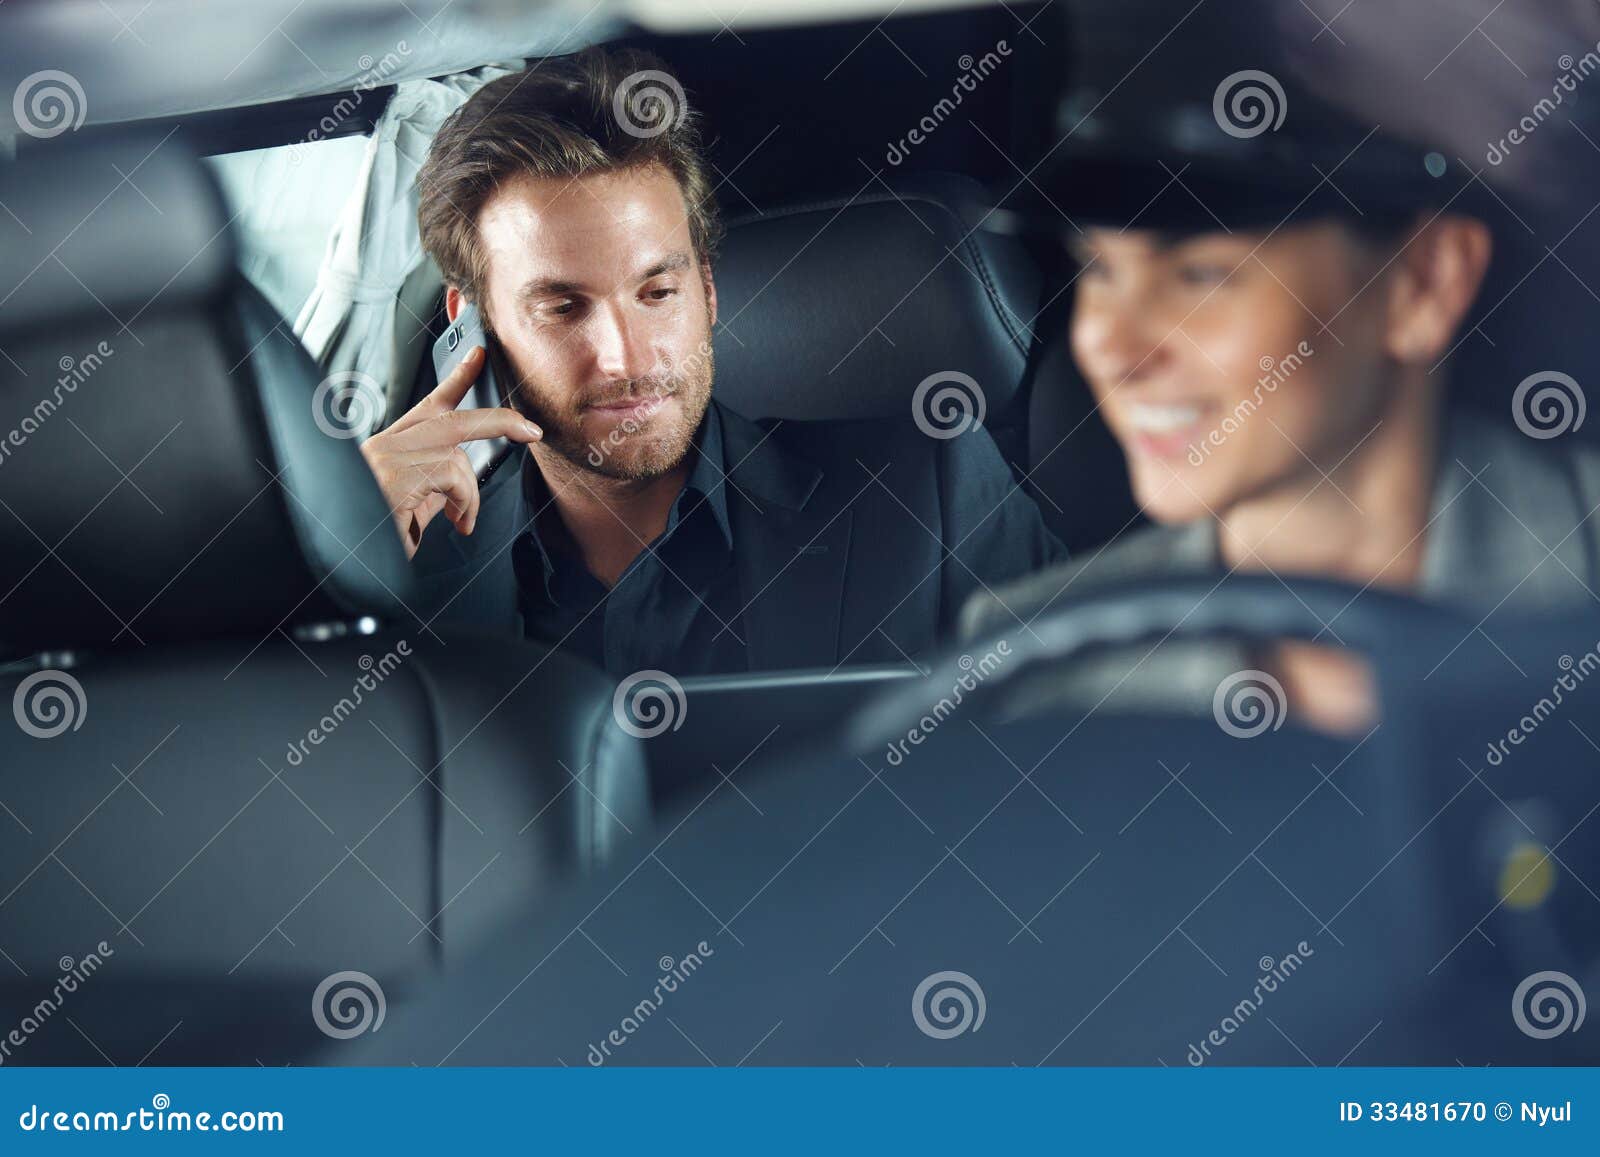 businessman in limousine chauffeur driving